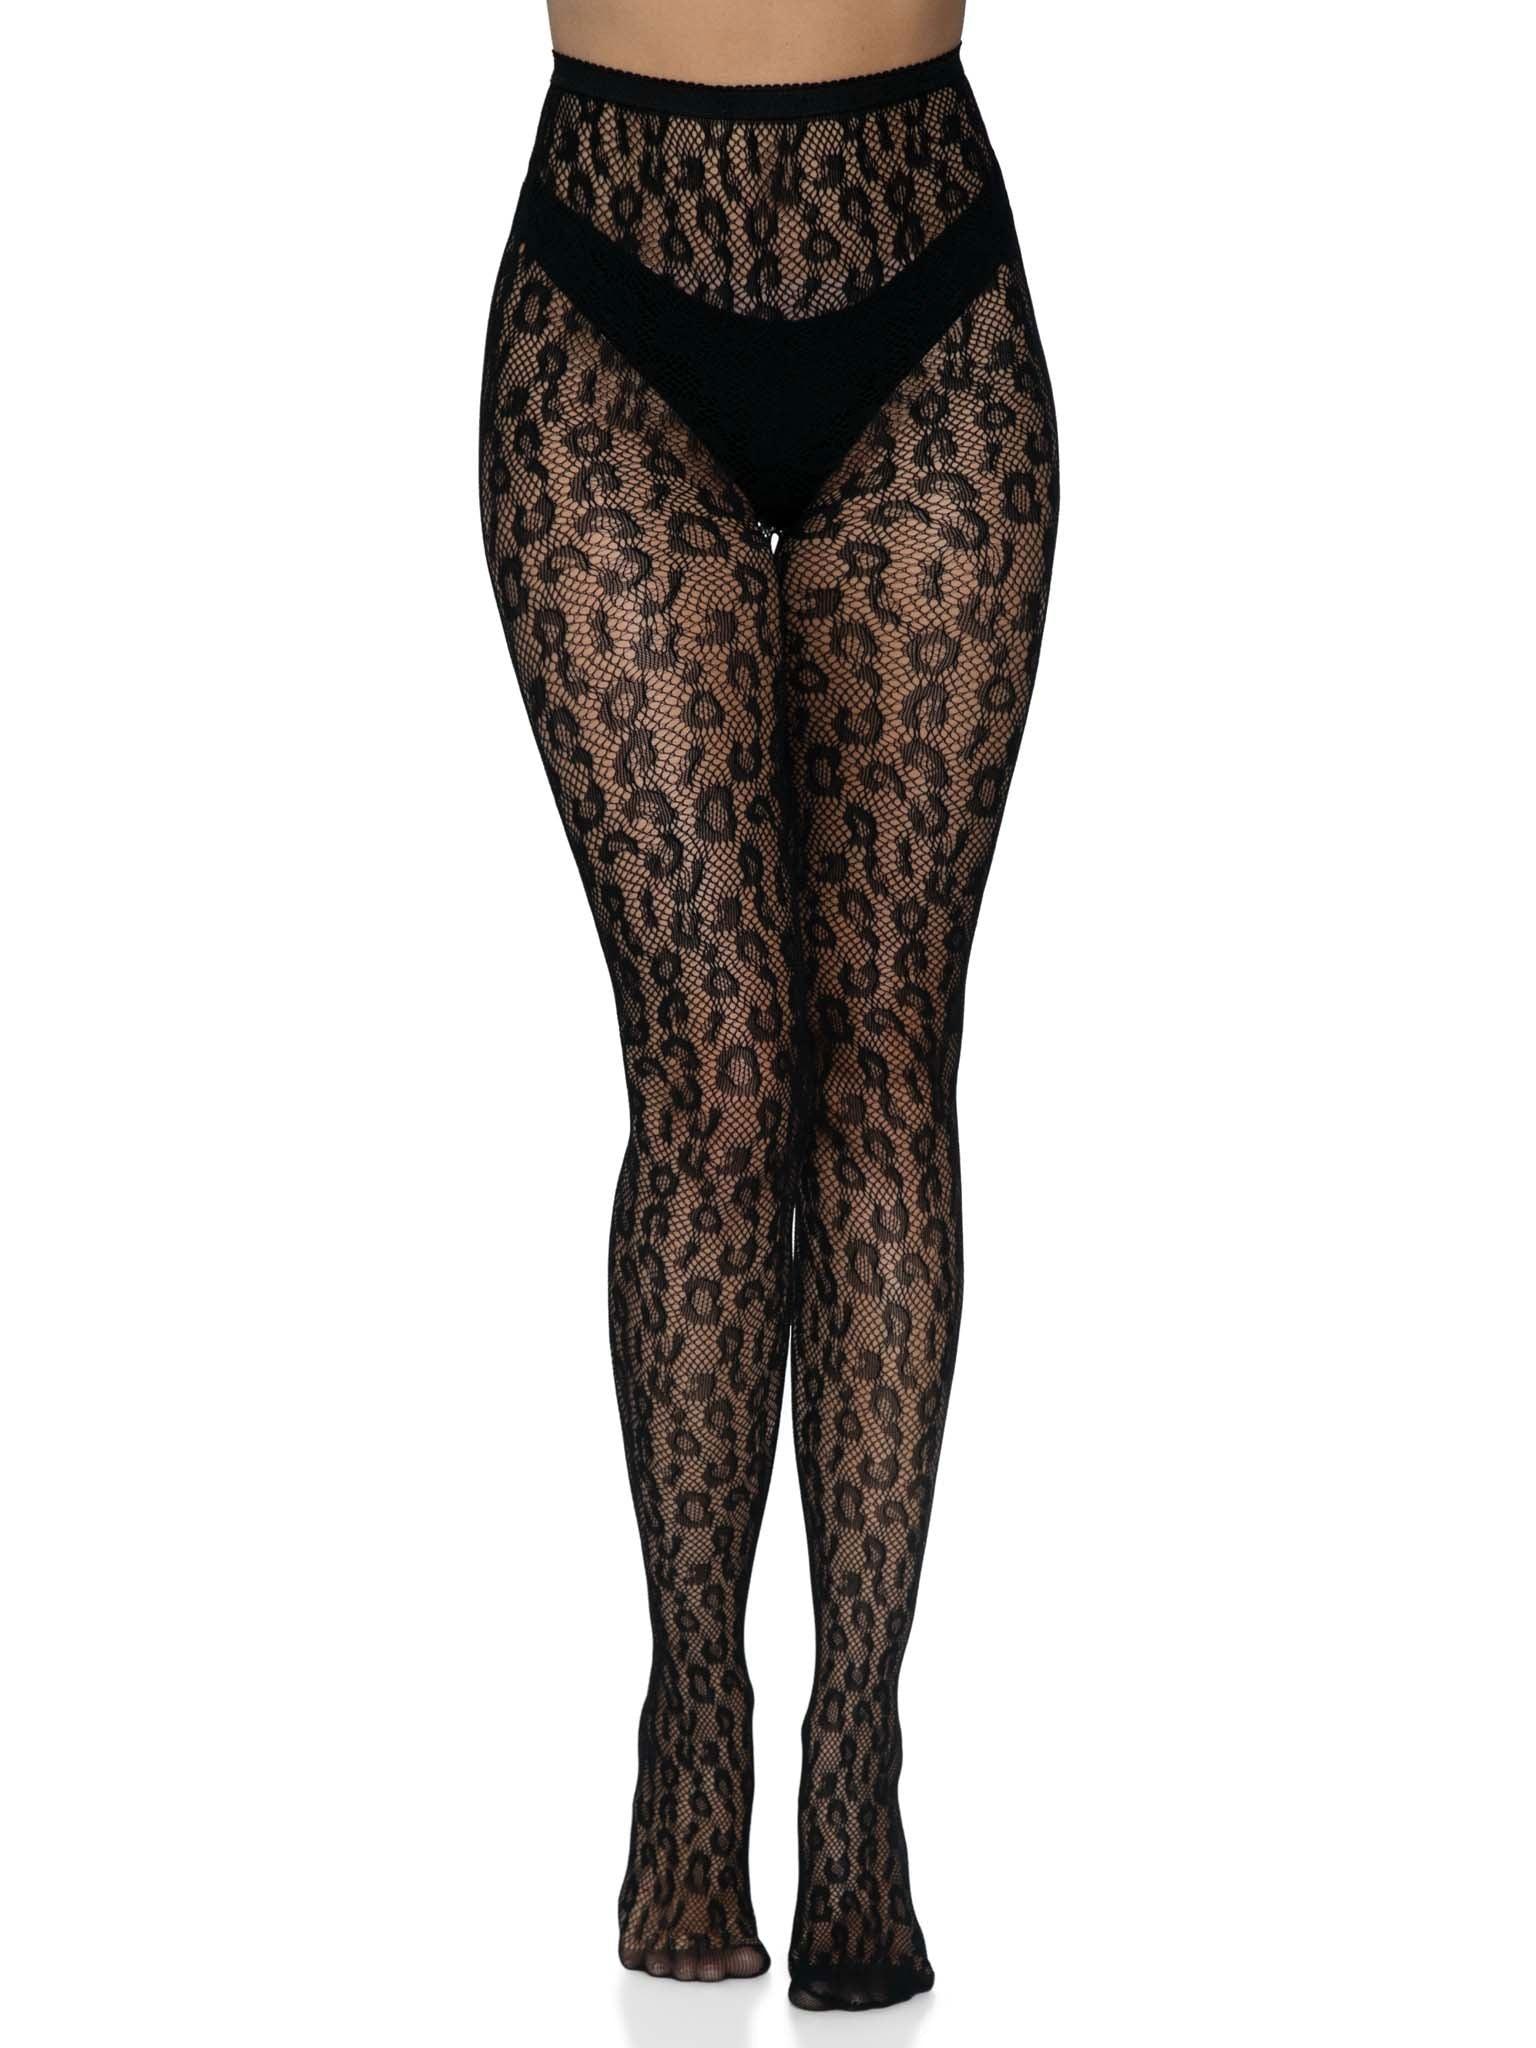 Leopard Net Tights - One Size - Black - My Sex Toy Hub